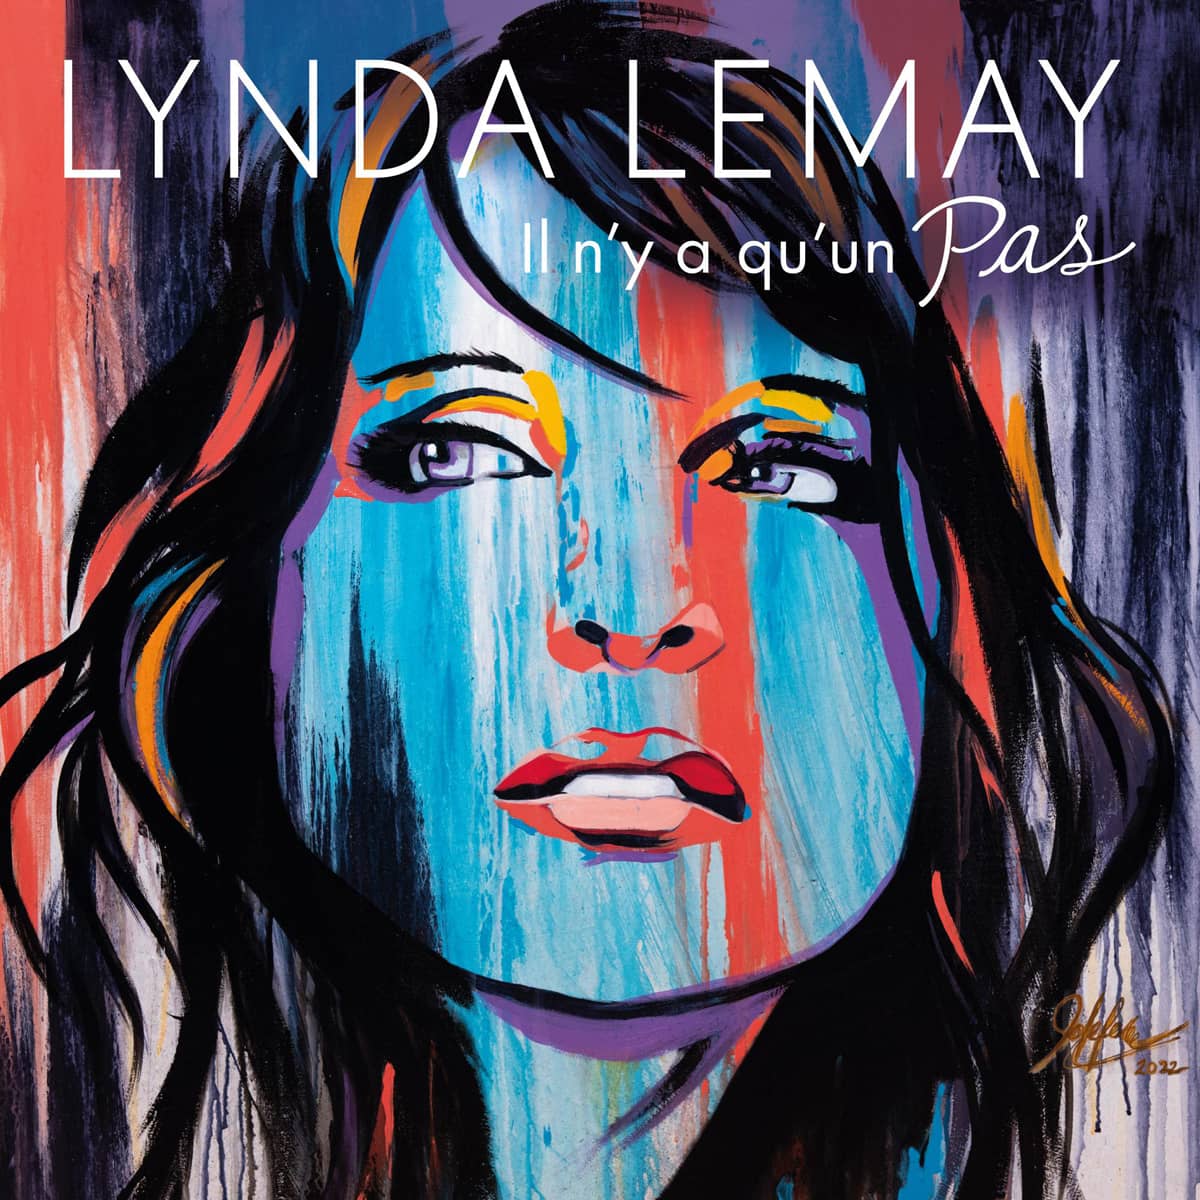 Il n'y a qu'un pas - Lynda Lemay CD Album 2023